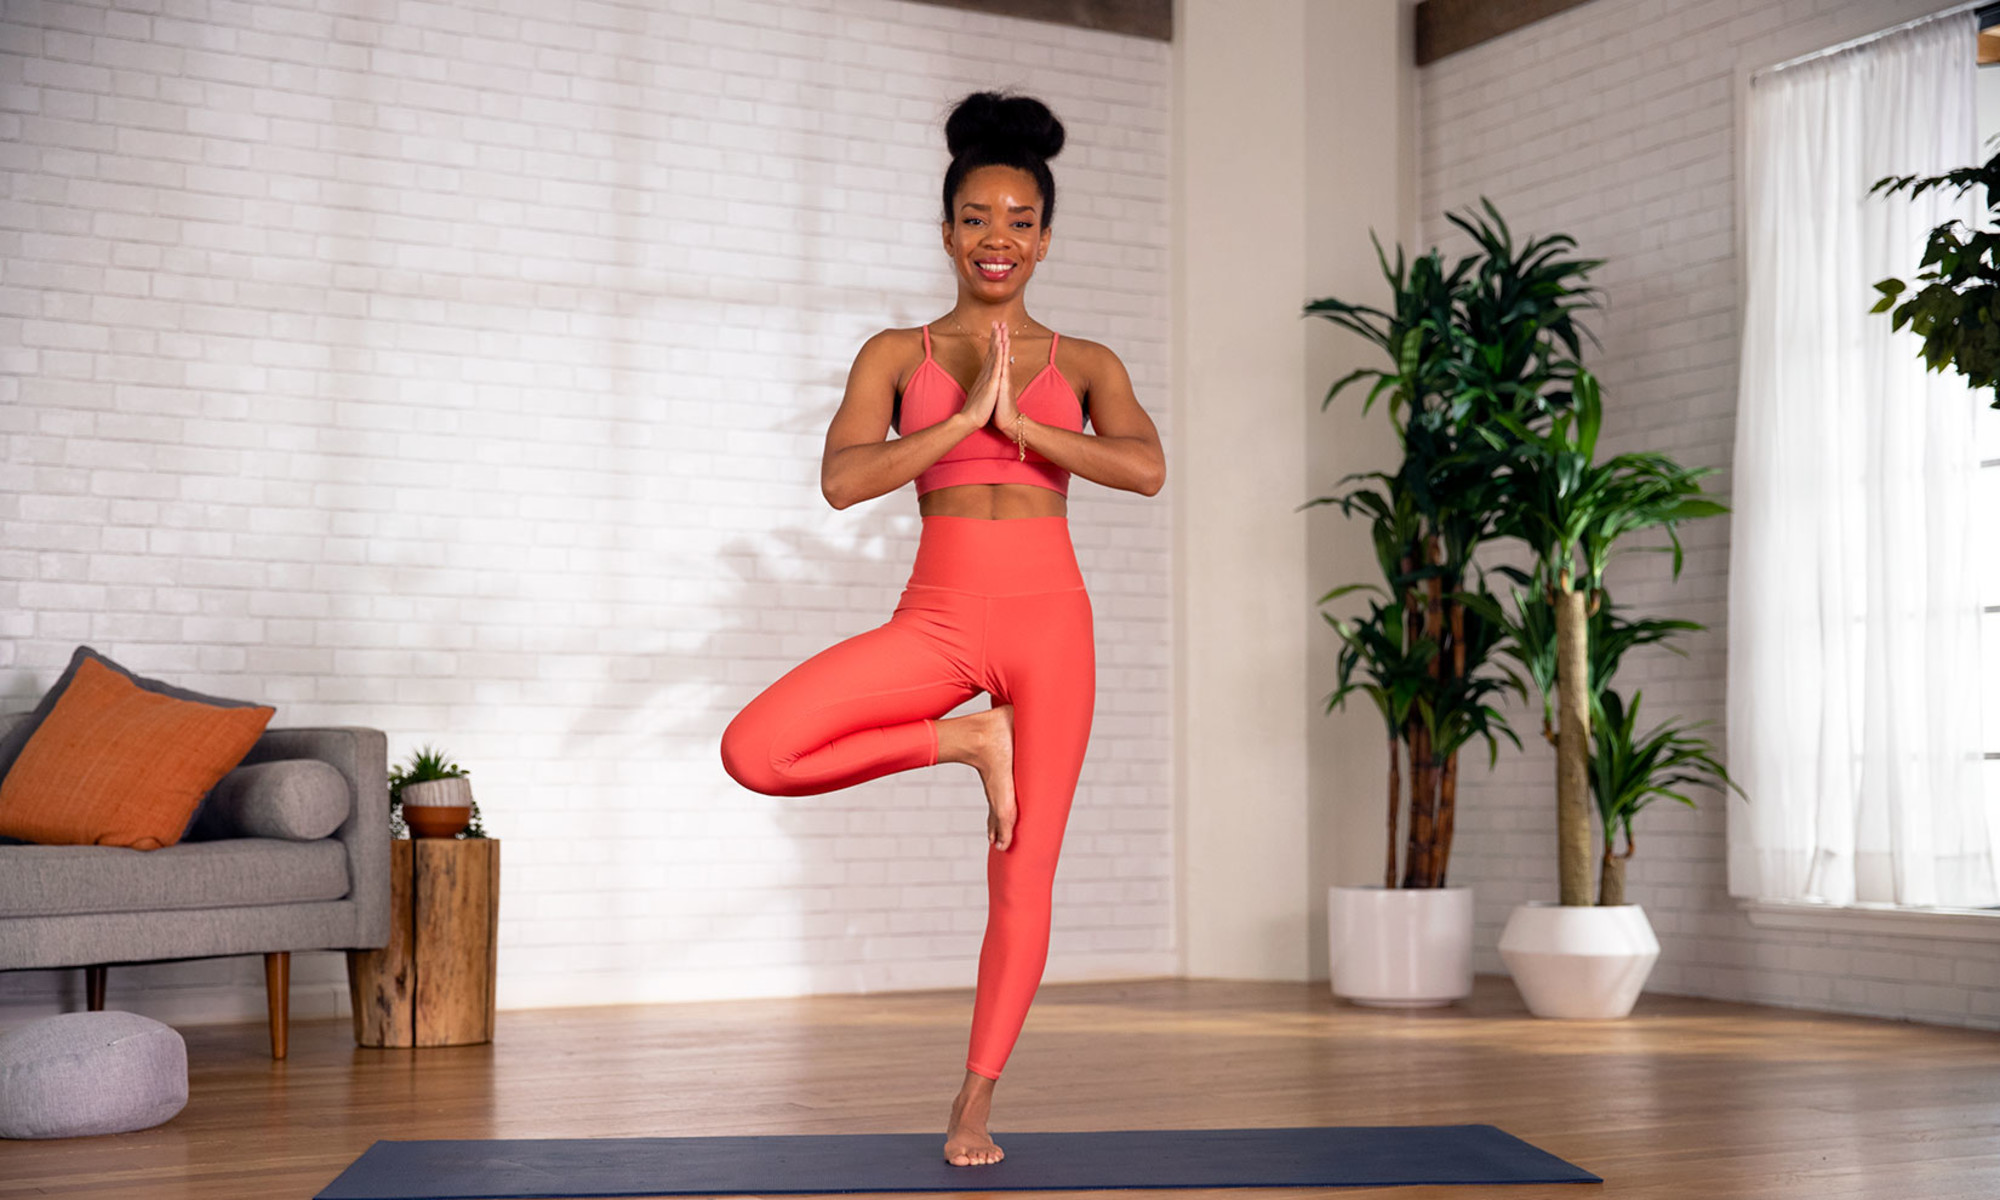 The 15 Best Standing Yoga Poses To Improve Balance  Stability   mindbodygreen